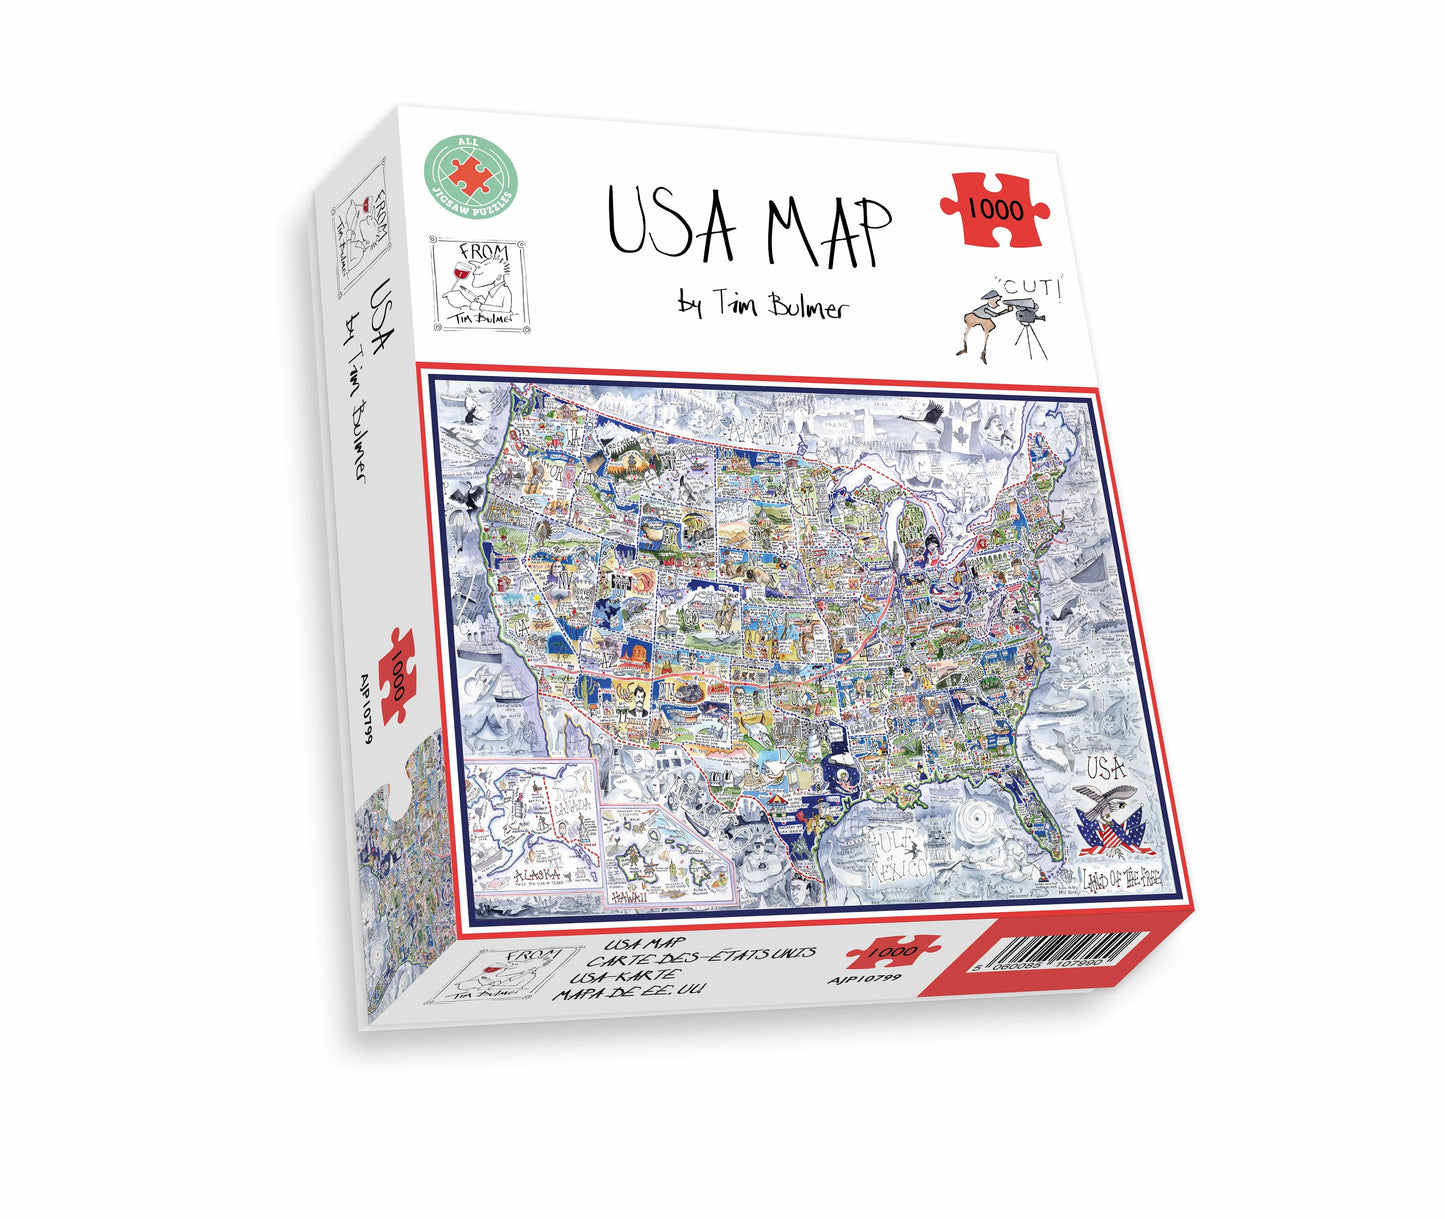 USA Map - Tim Bulmer 1000 Piece Jigsaw Puzzle box